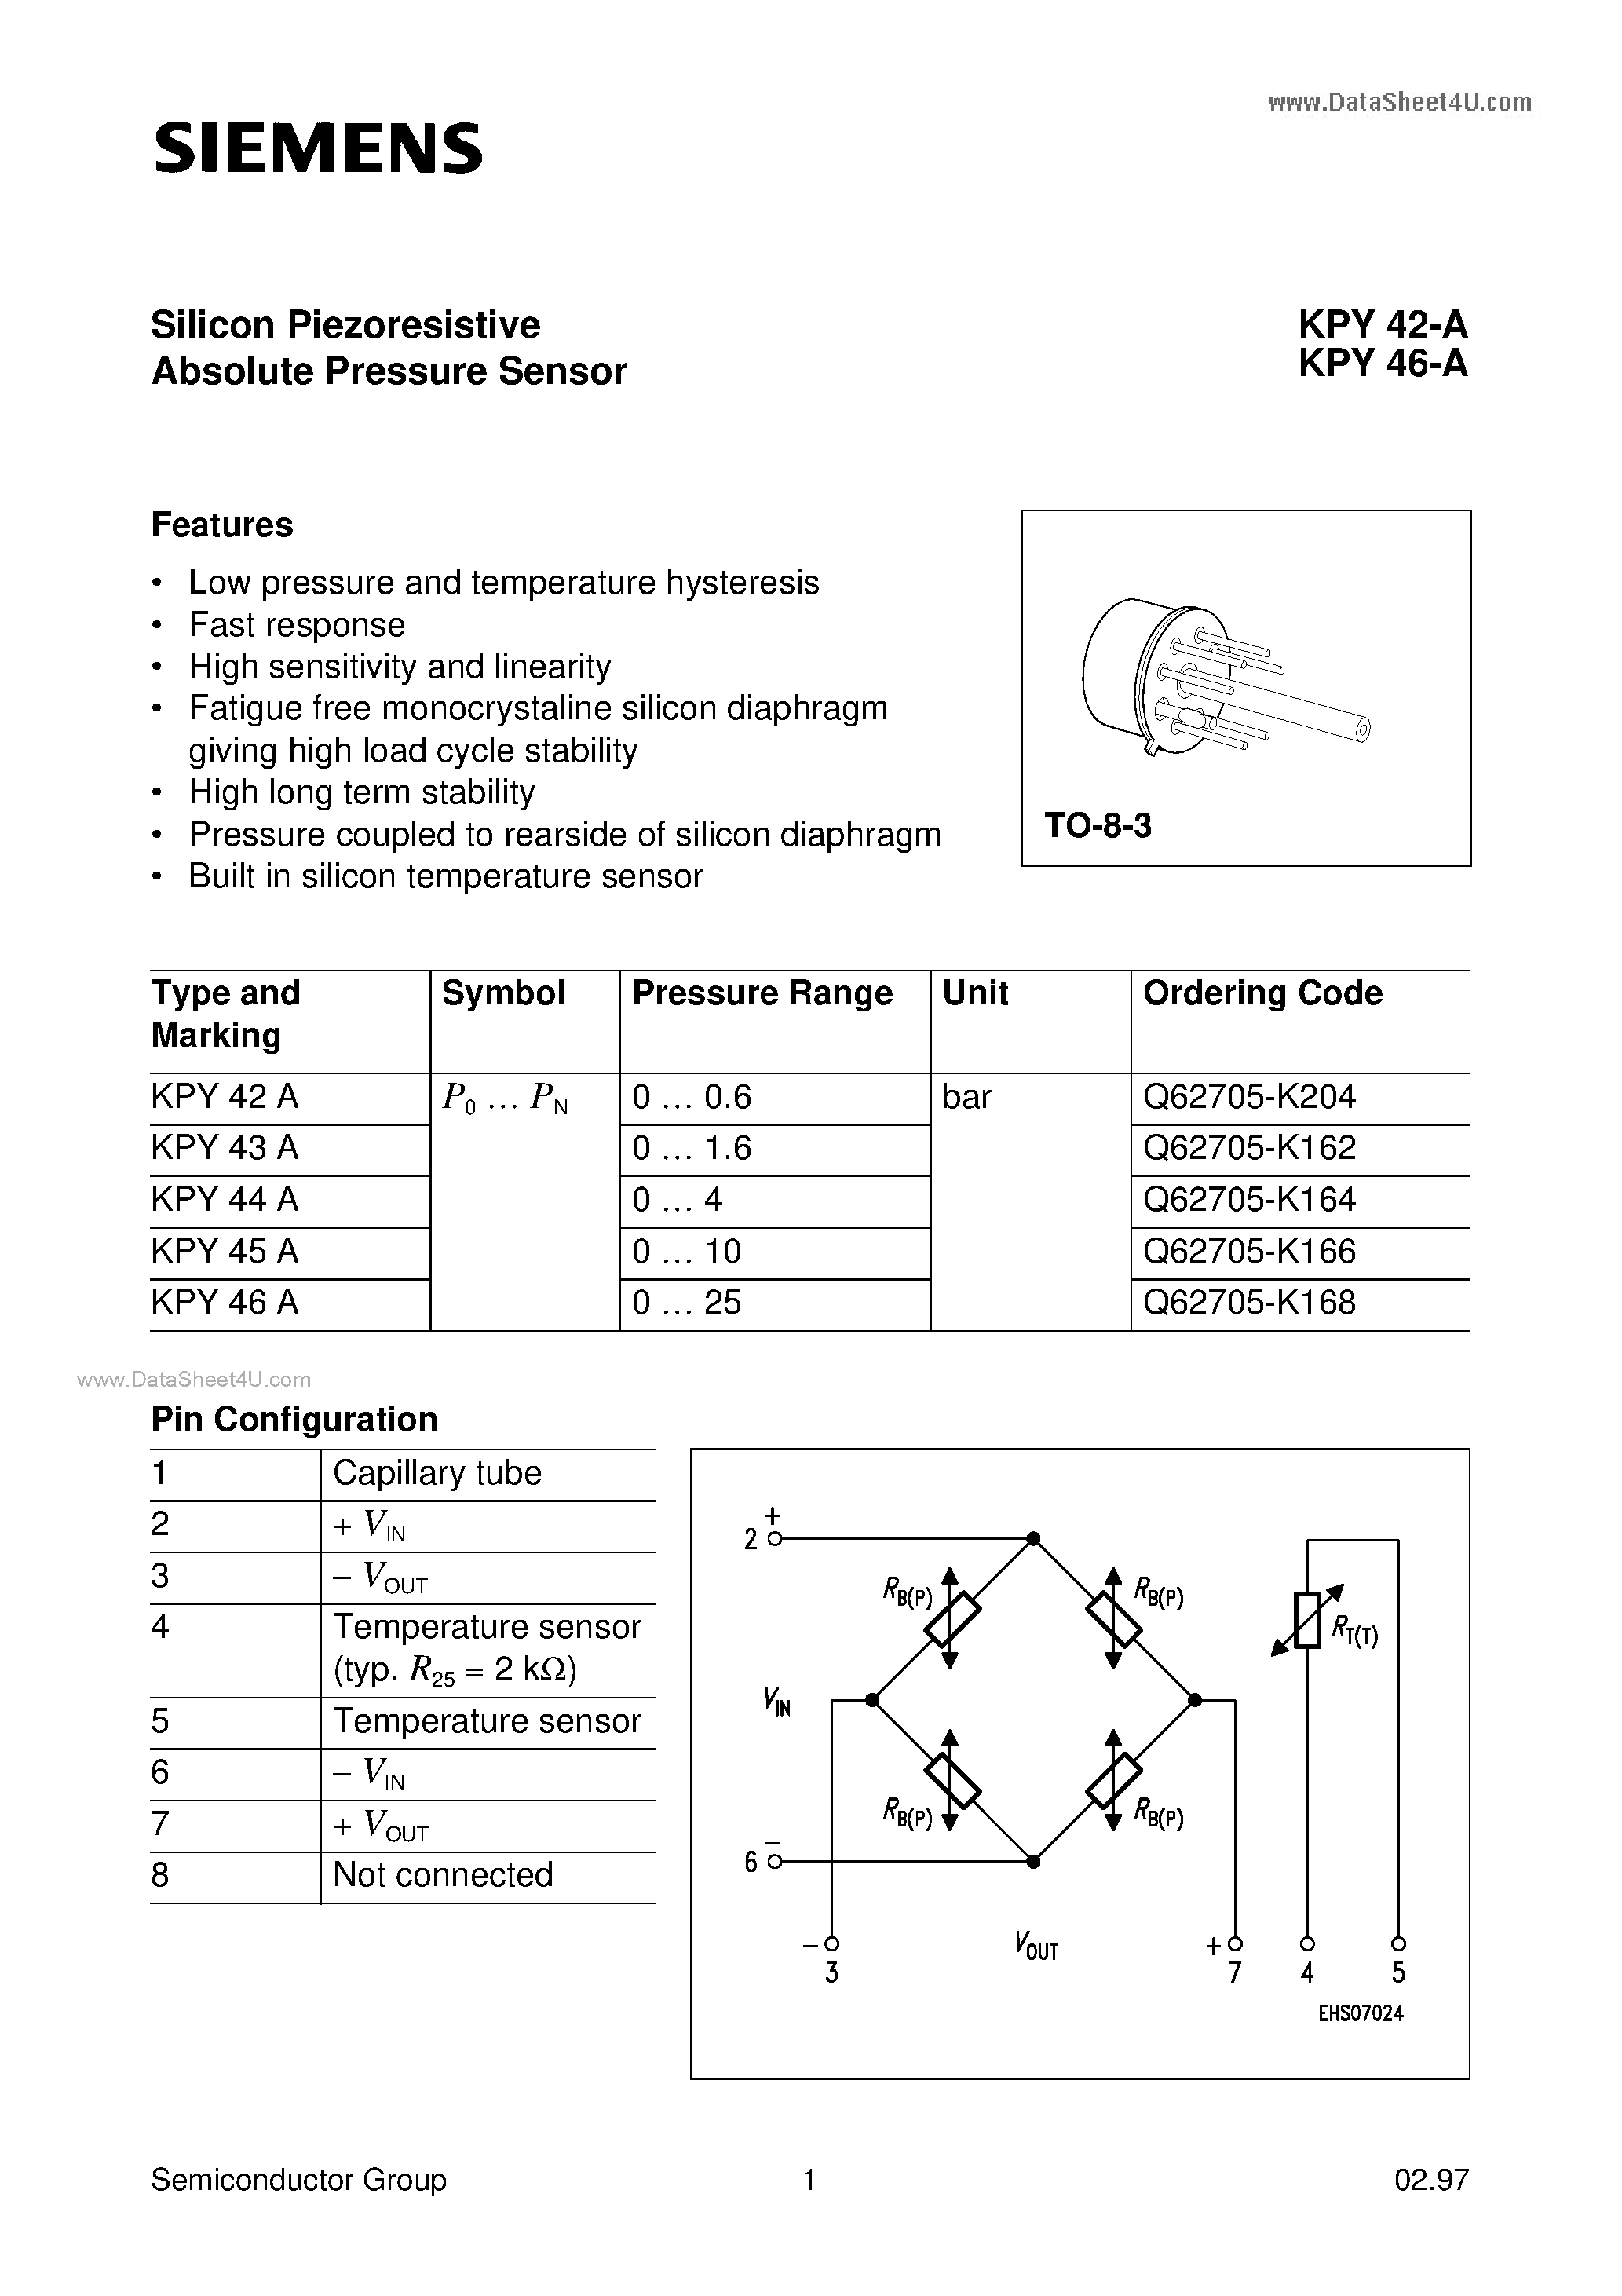 Datasheet KPY42-A - (KPY42-A / KPY46-A) Silicon Piezoresistive Absolute Pressure Sensor page 1